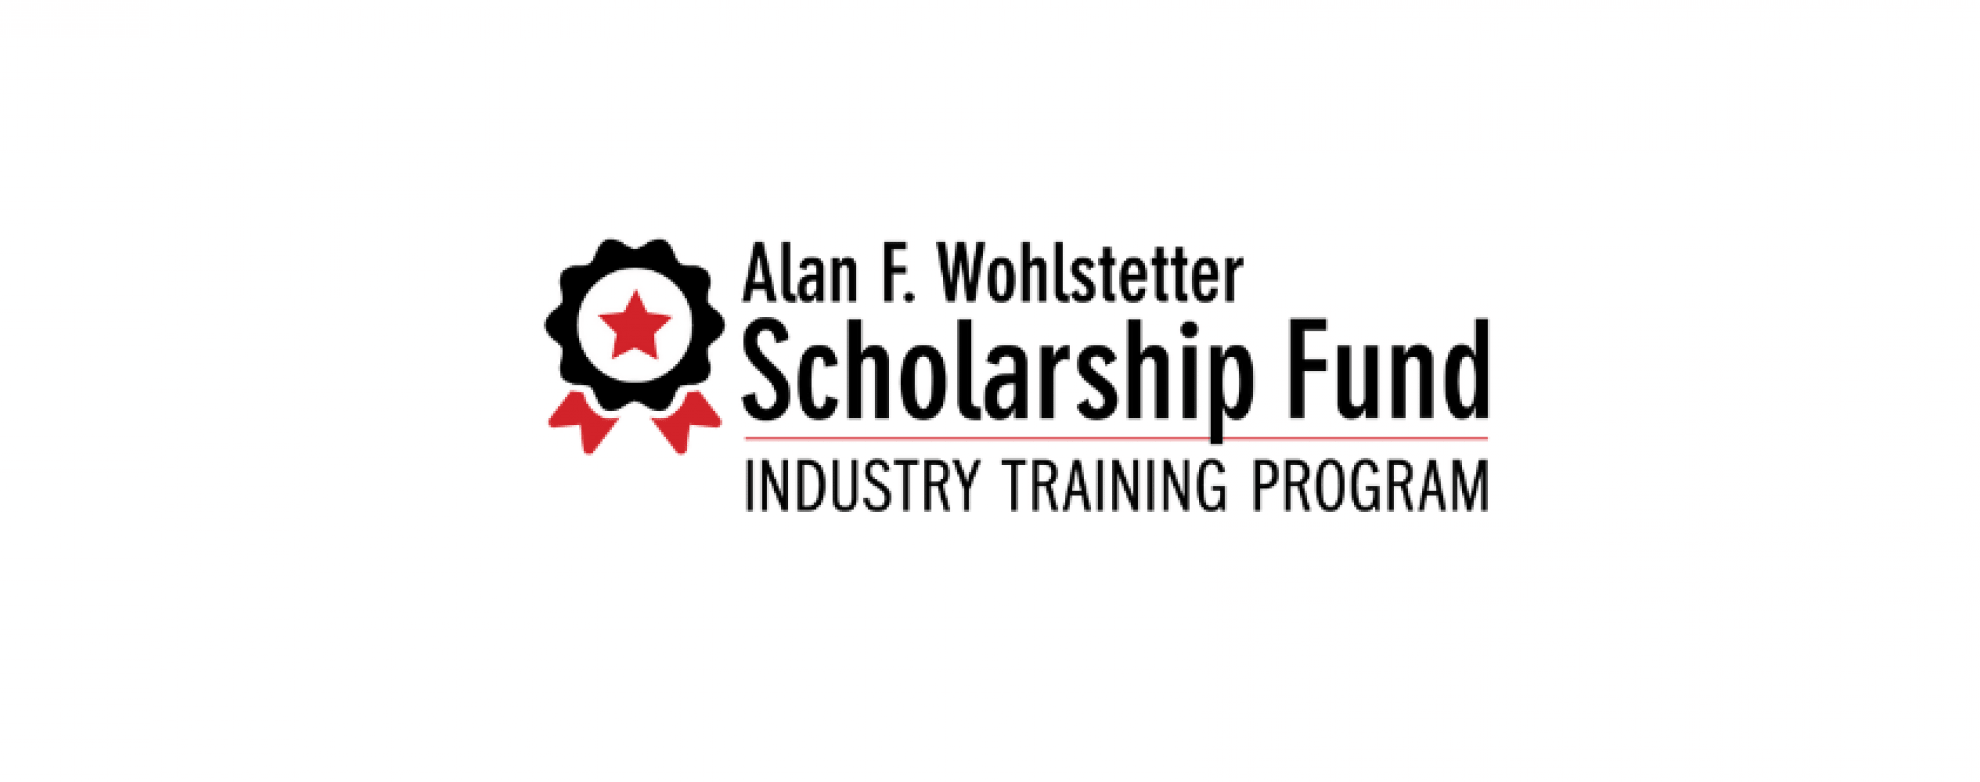 Apply for the Alan F. Wohlstetter Scholarship Industry Training Program Award!